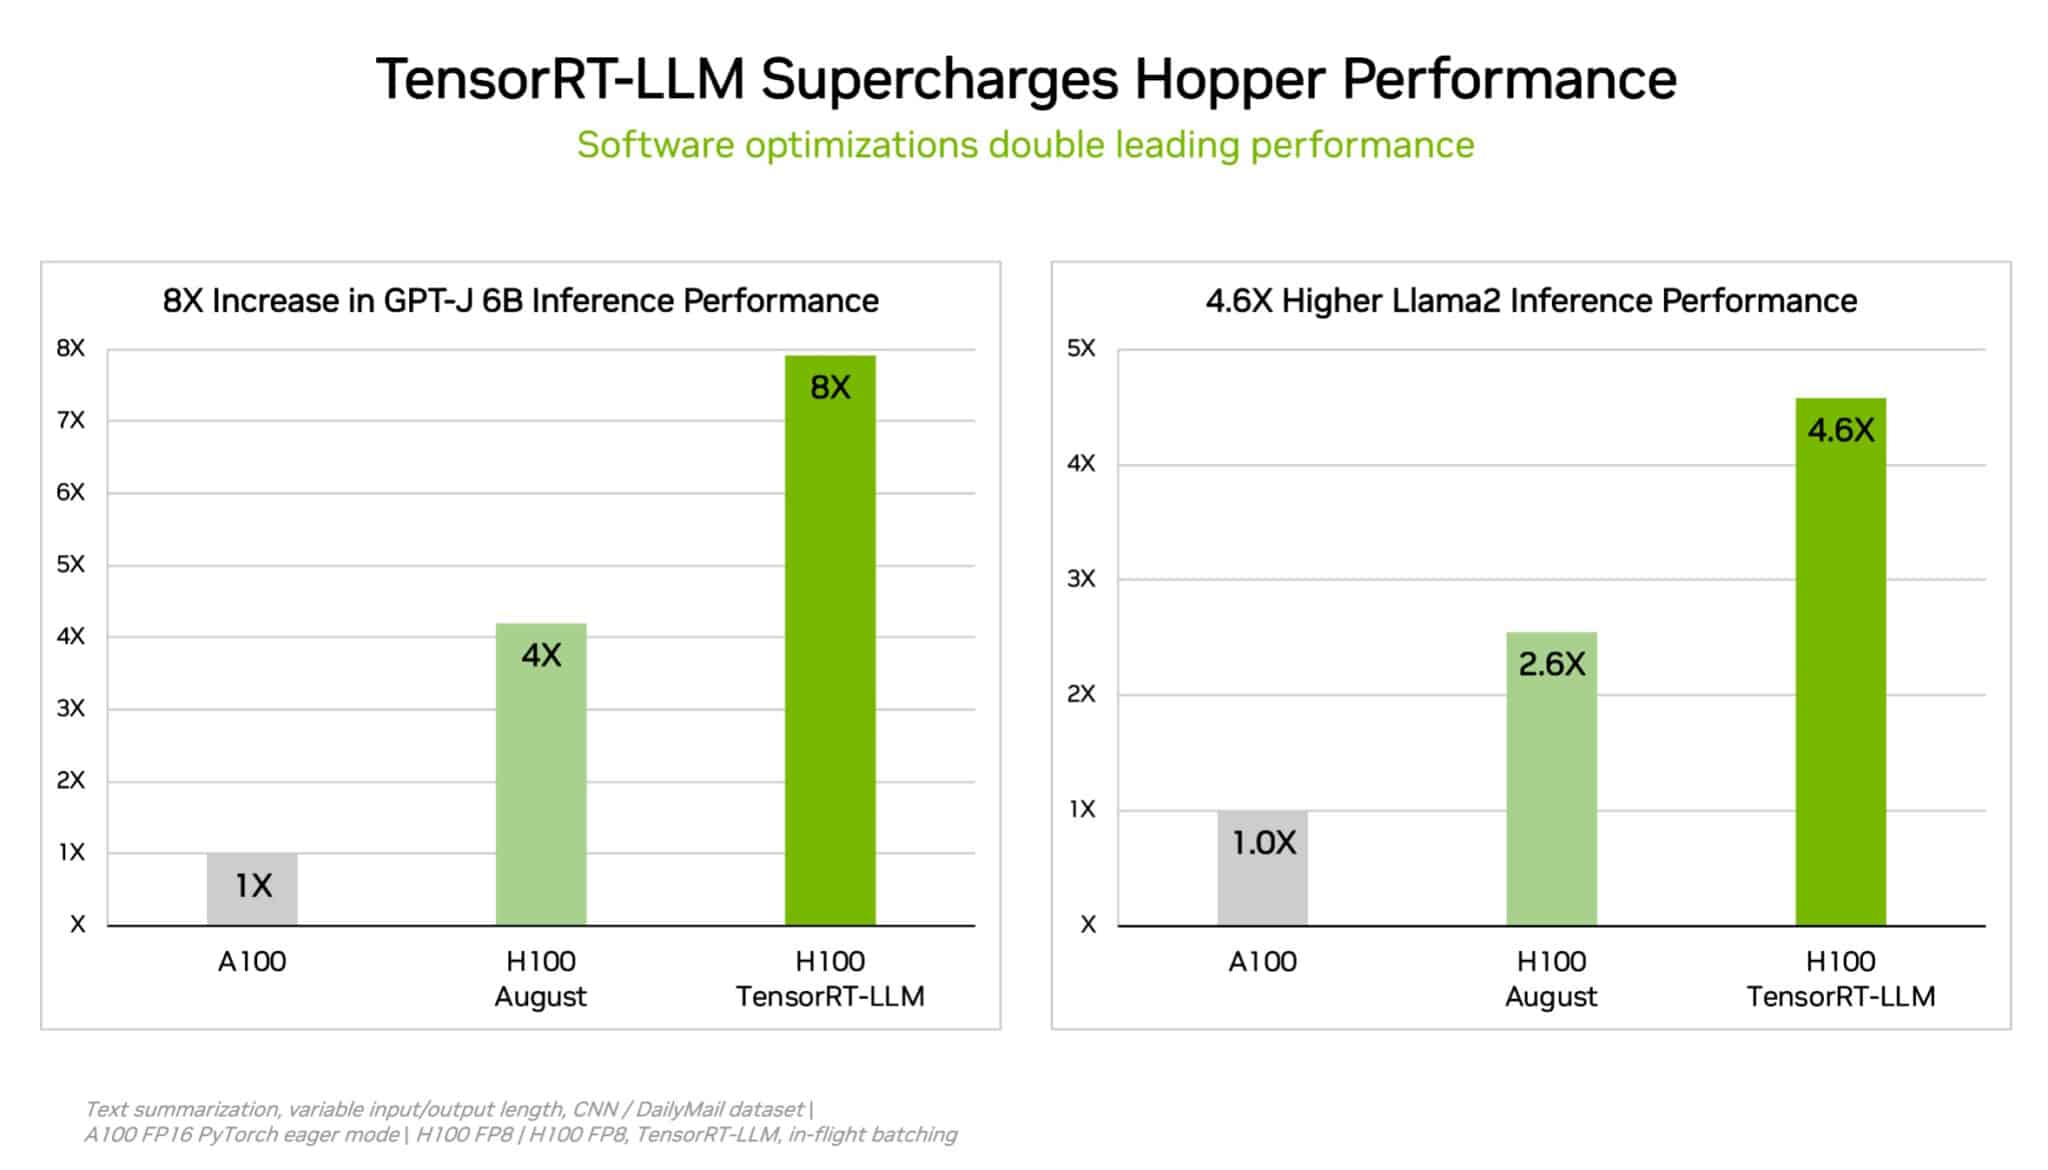 NVIDIA Grace Hopper Superchip Sweeps MLPerf Inference Benchmarks